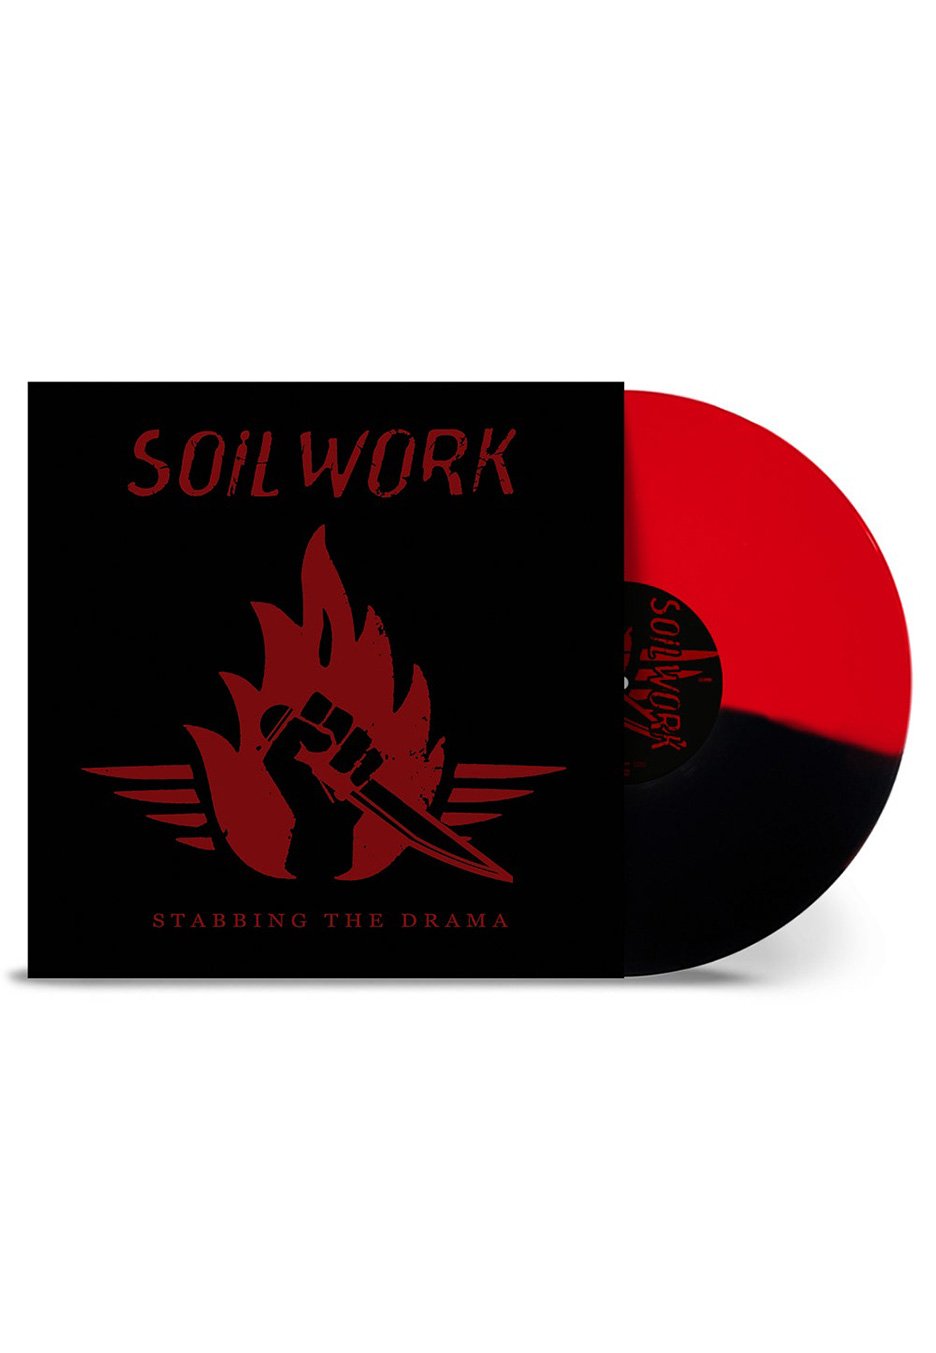 Soilwork - Stabbing The Drama Ltd. Red/Black Split - Colored Vinyl